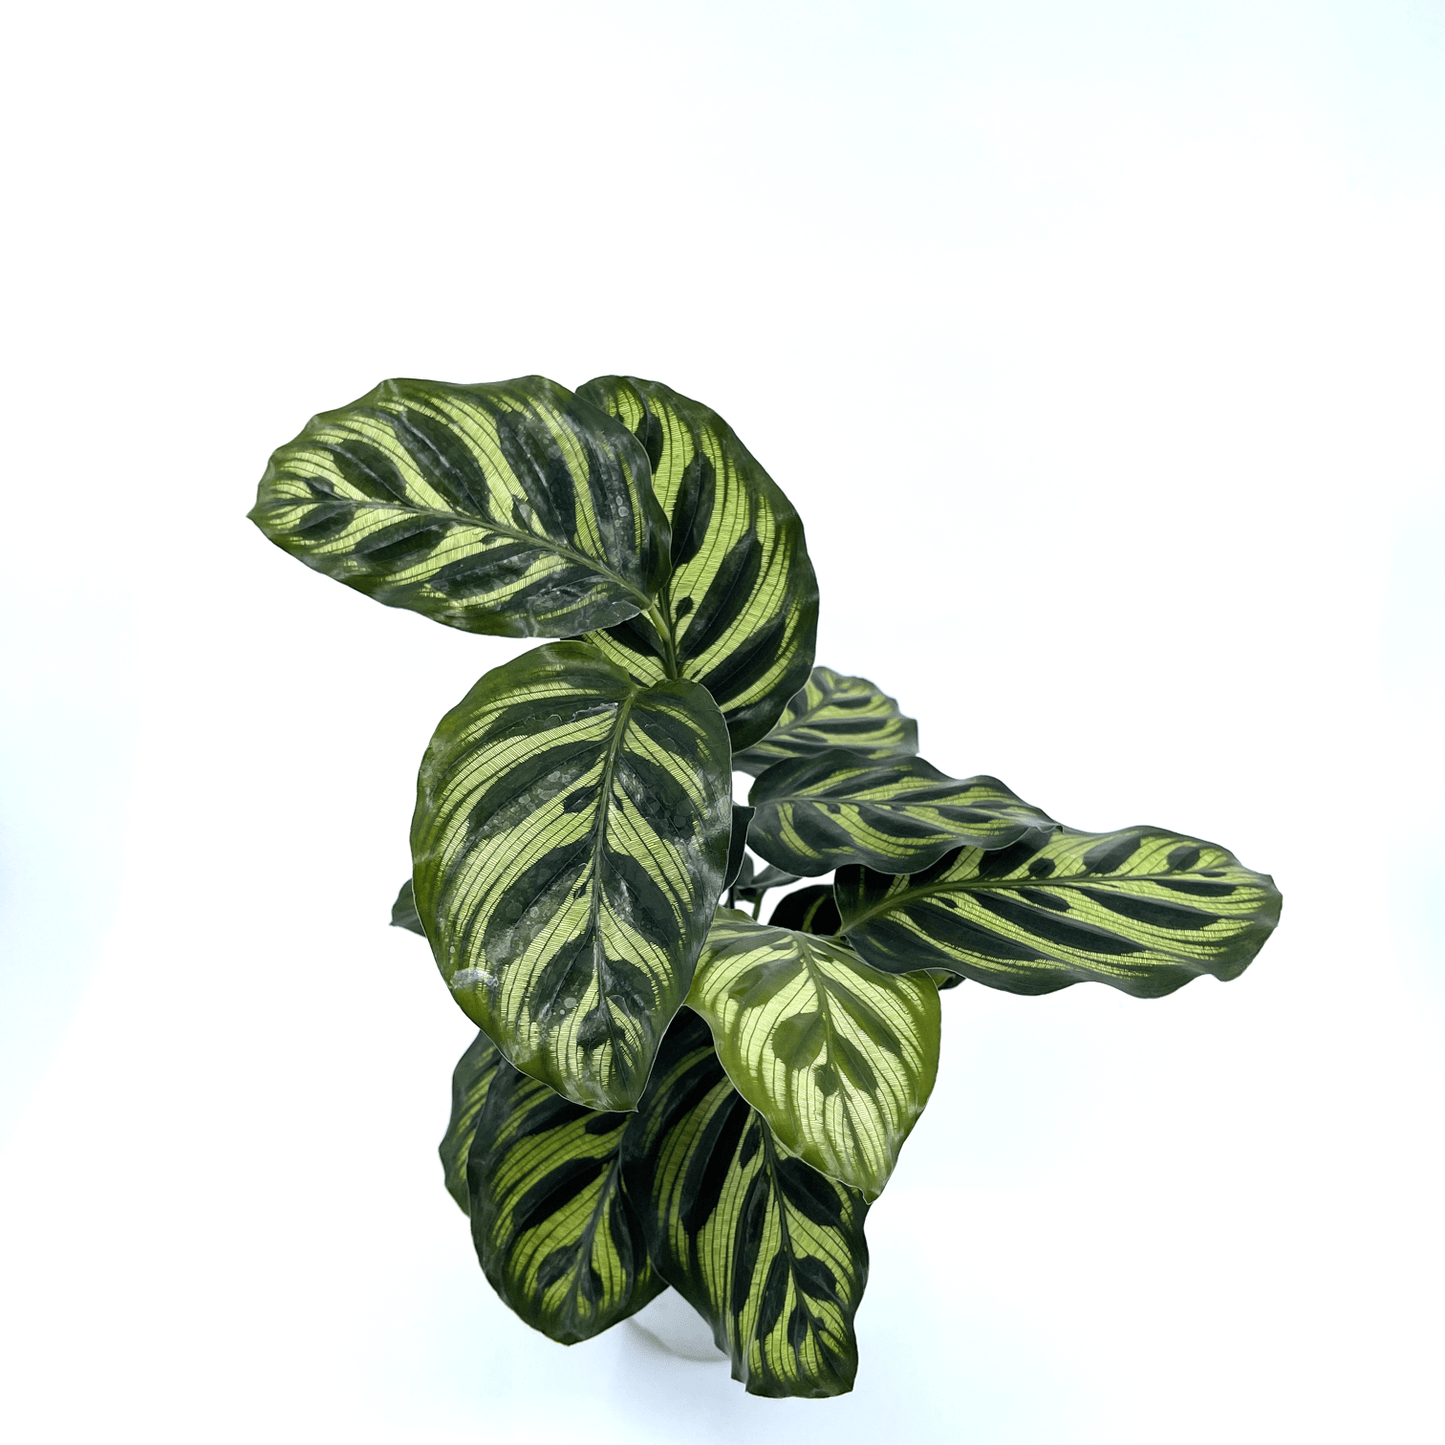 Calathea - Makoyana (Peacock Plant) - The Plant Buddies